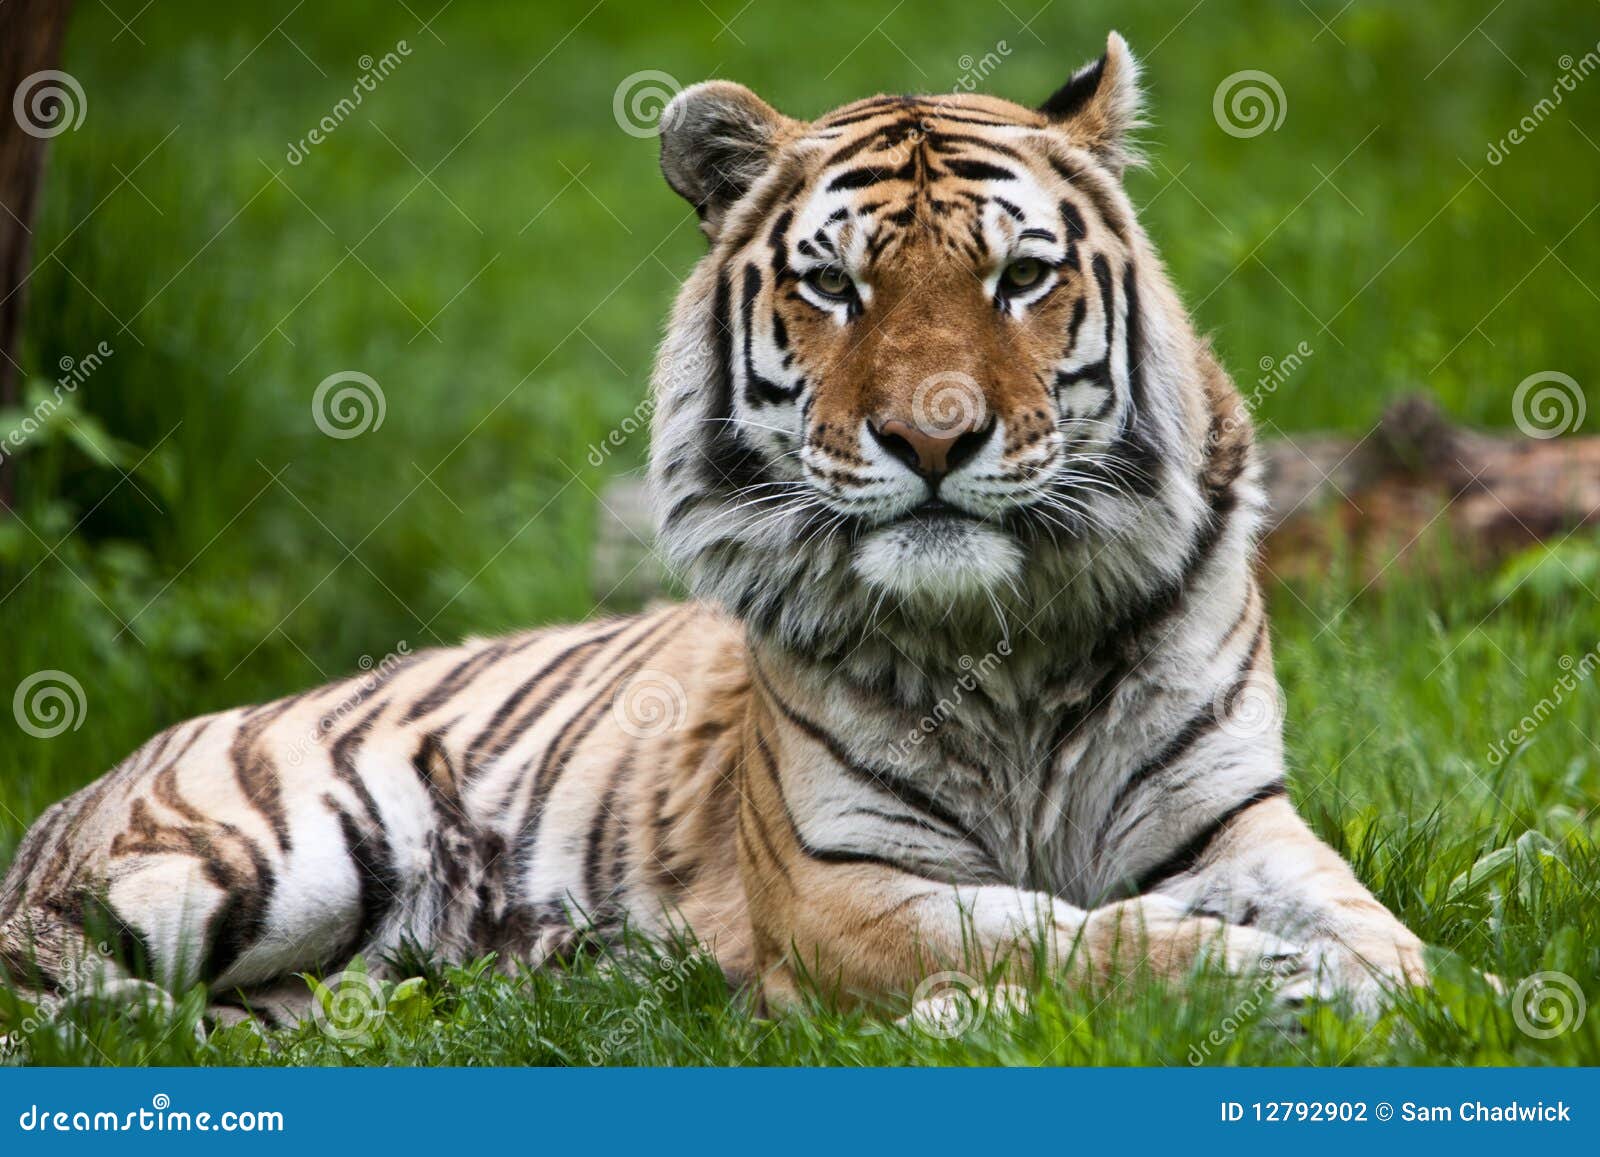 amur tiger